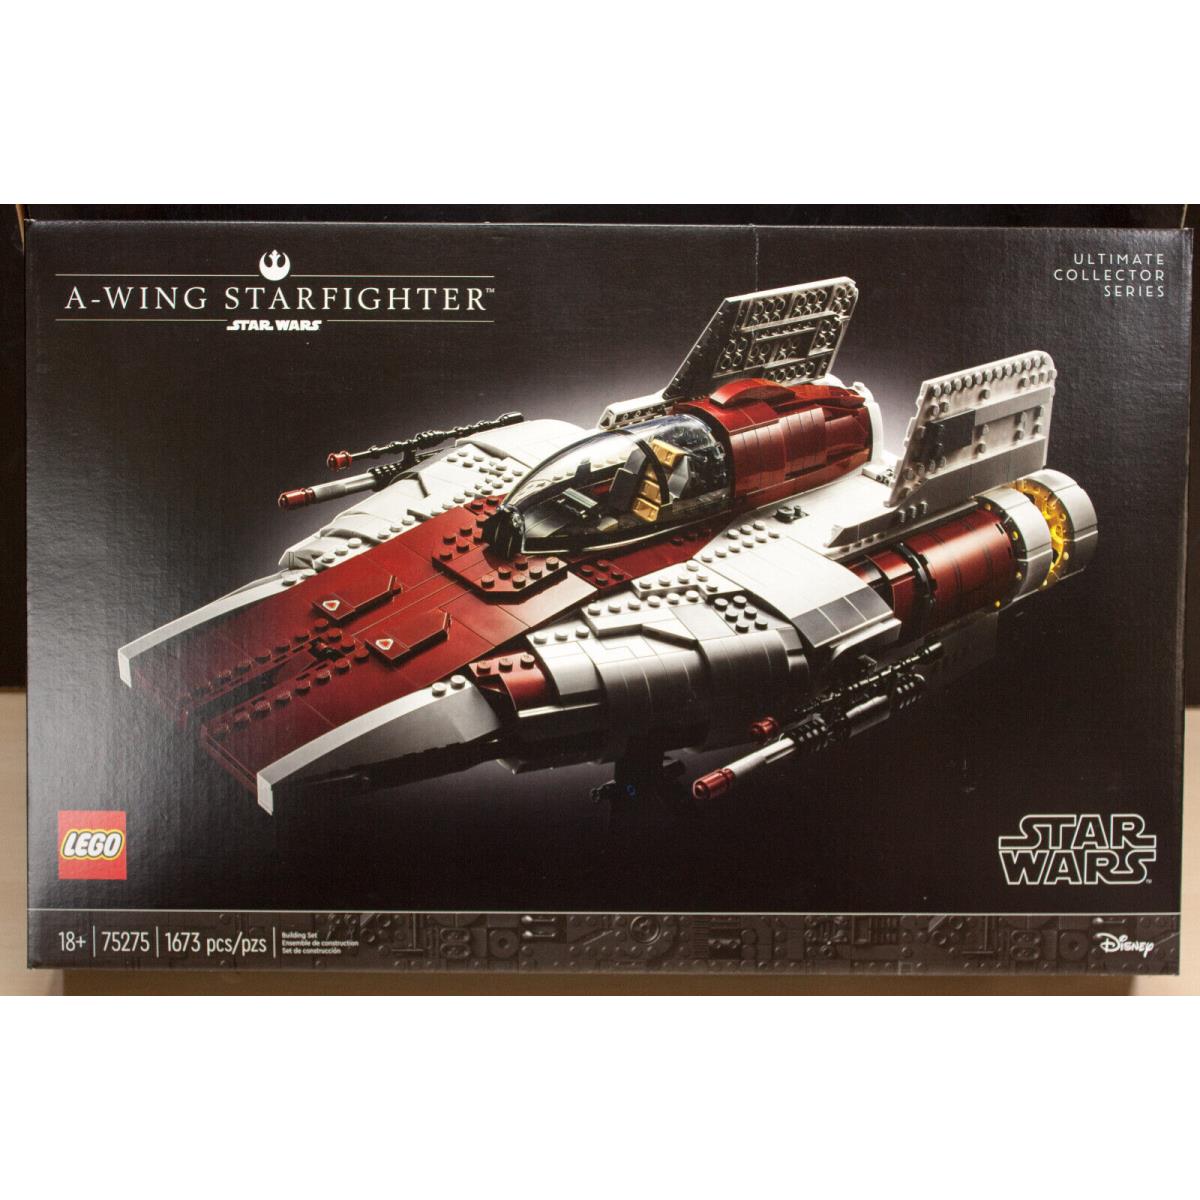 Lego Star Wars A-wing Starfighter Ucs 75275 Box